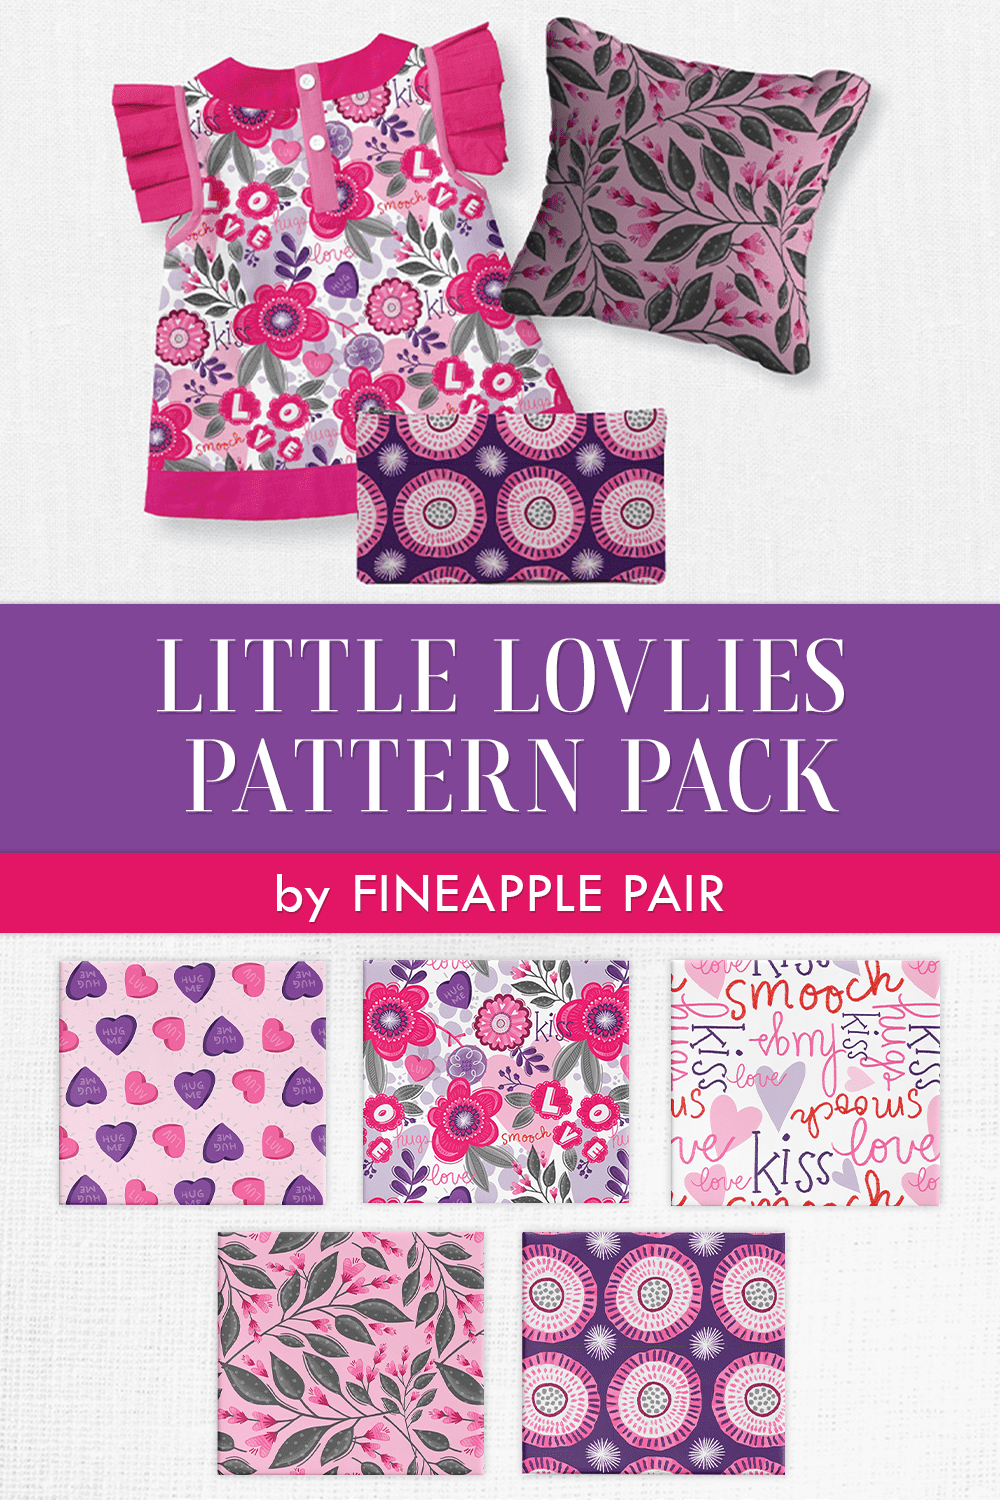 Little Lovlies Pattern Pack - Pinterest.